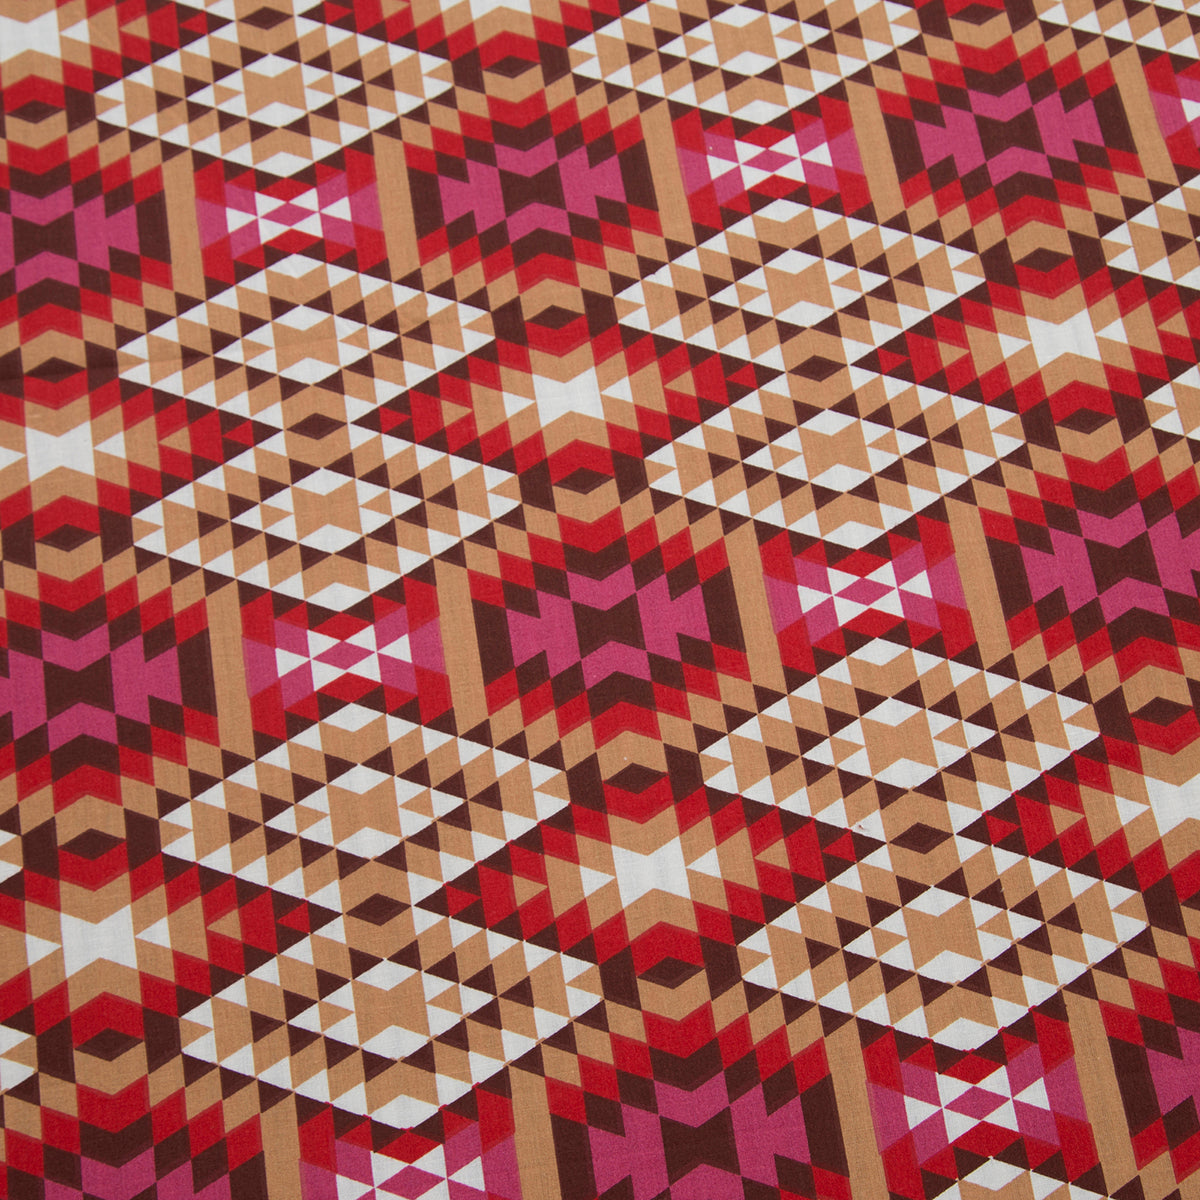 Donatella Aztec Printed 144 TC 100% Cotton Red Bed Sheet